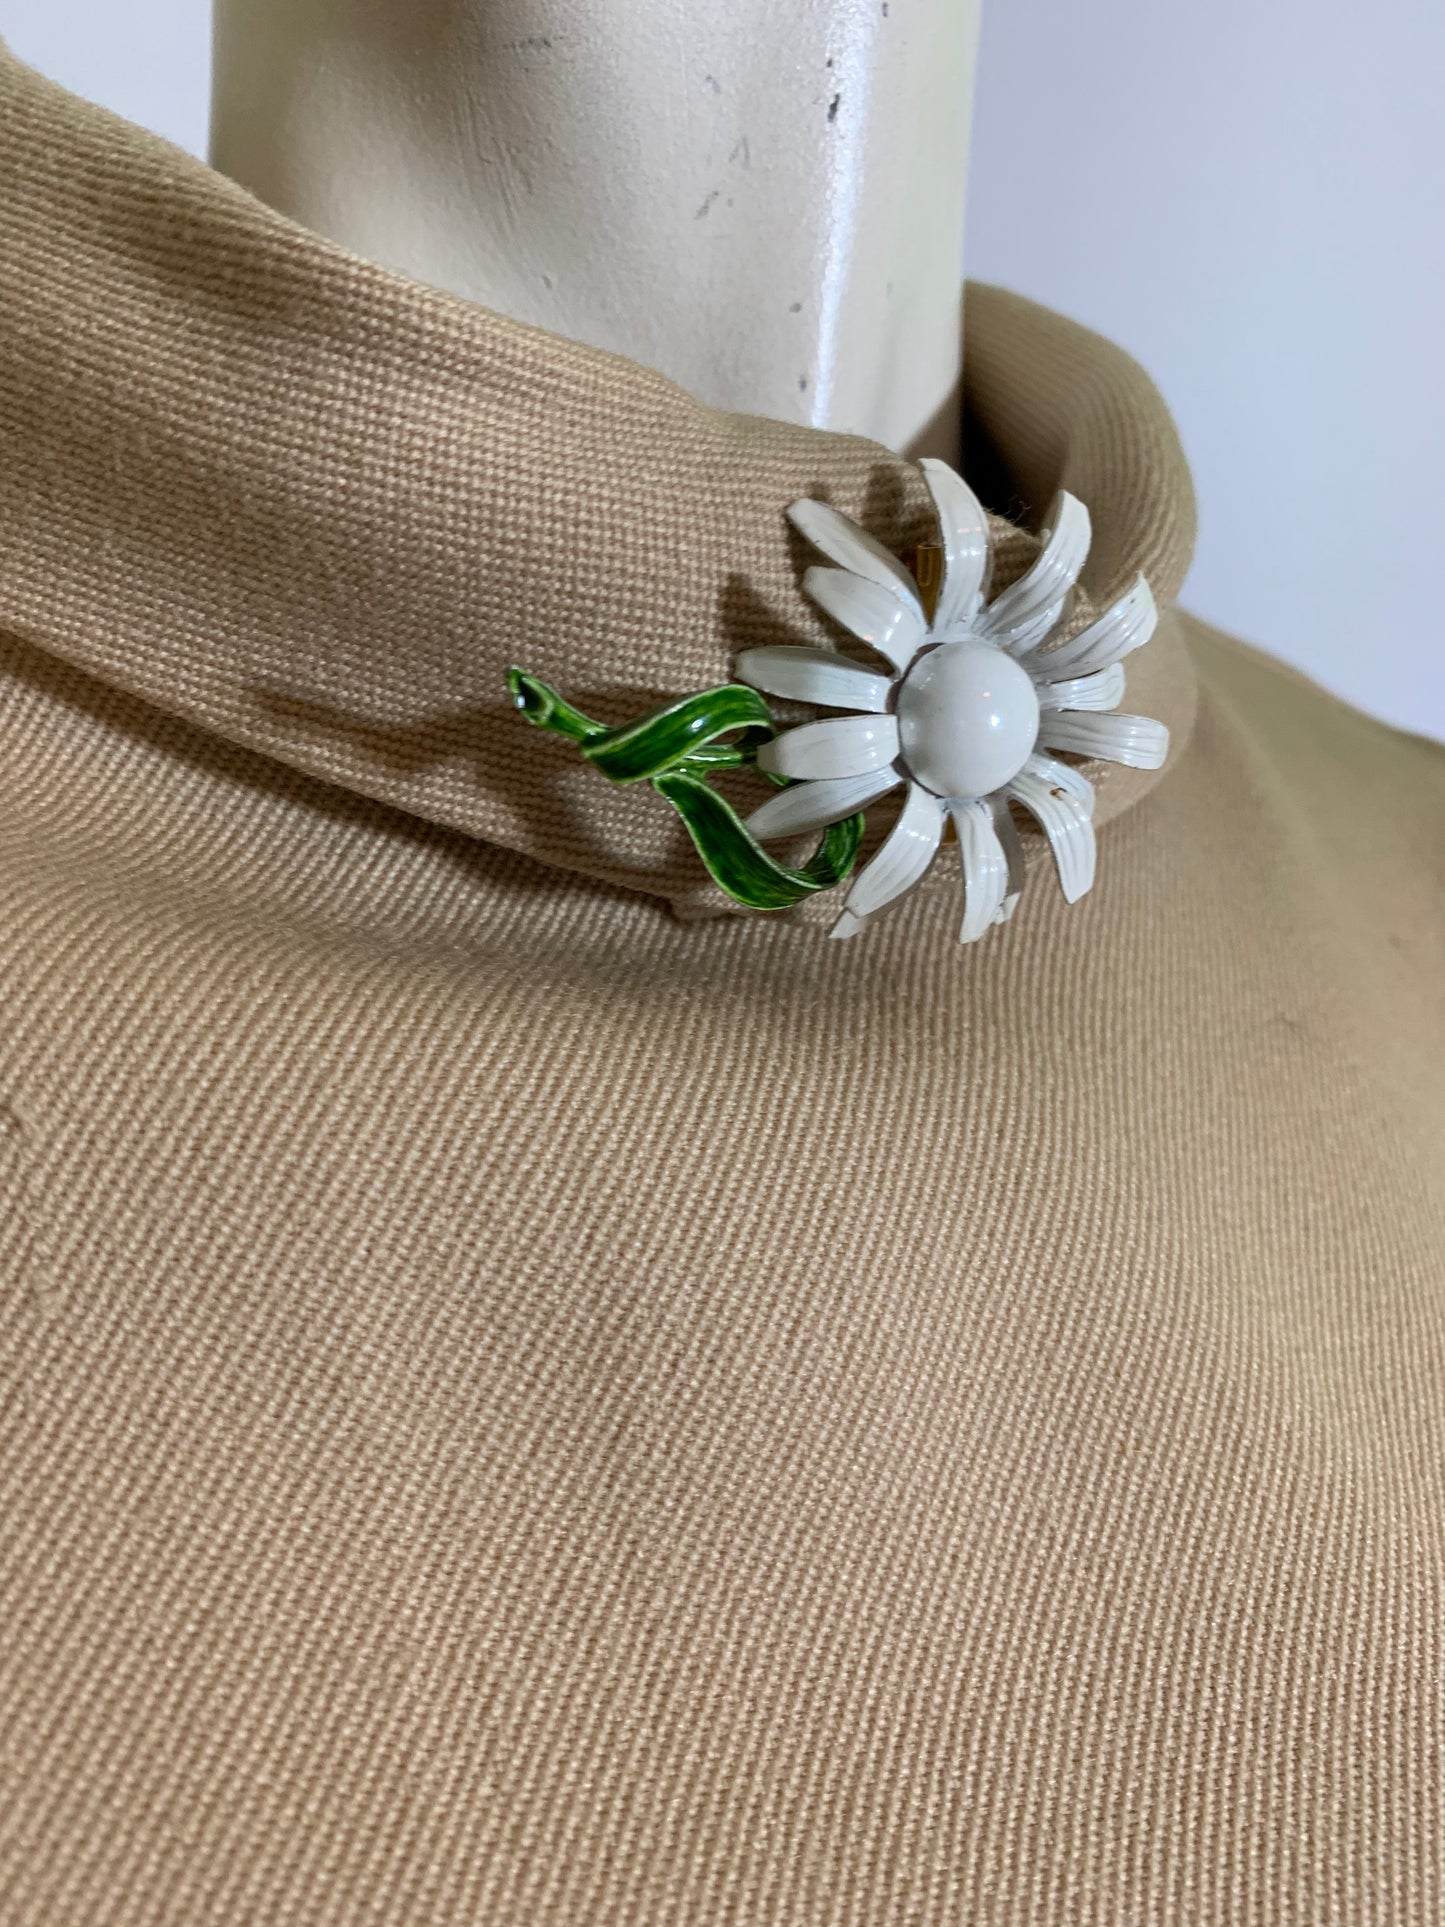 Chic Folded Collar Tan Dress circa 1960s